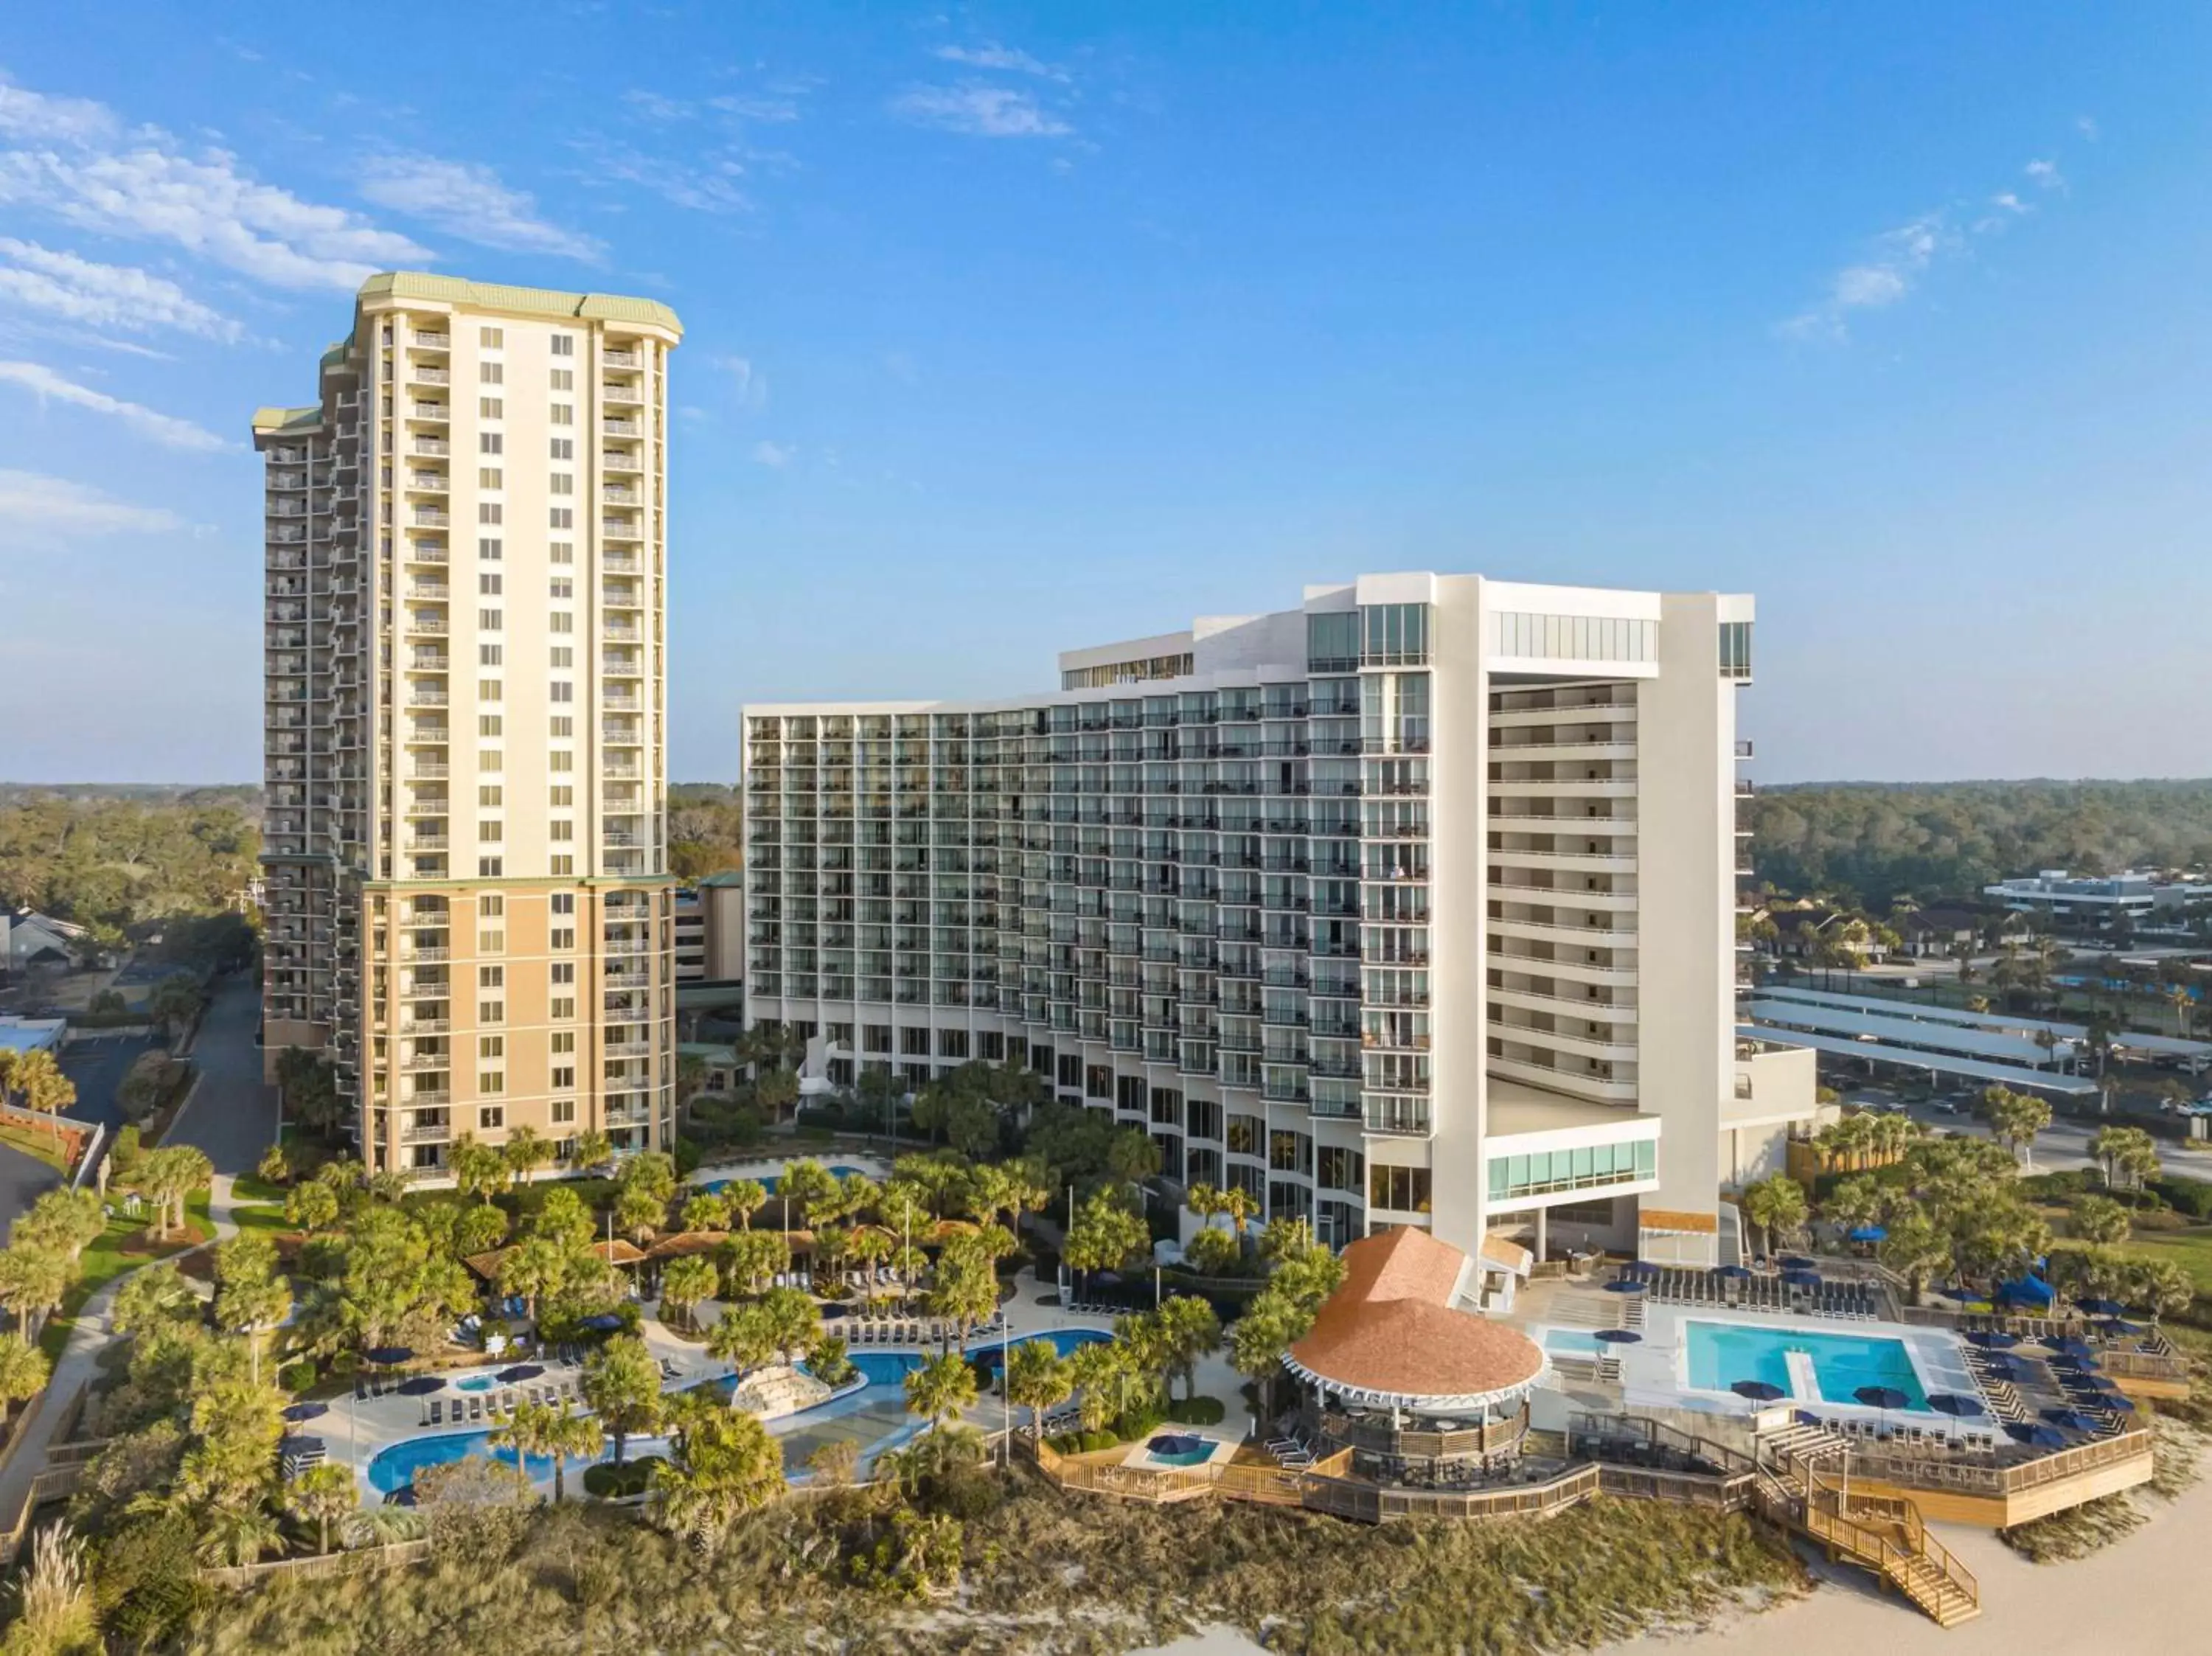 Property building, Bird's-eye View in Hilton Myrtle Beach Resort